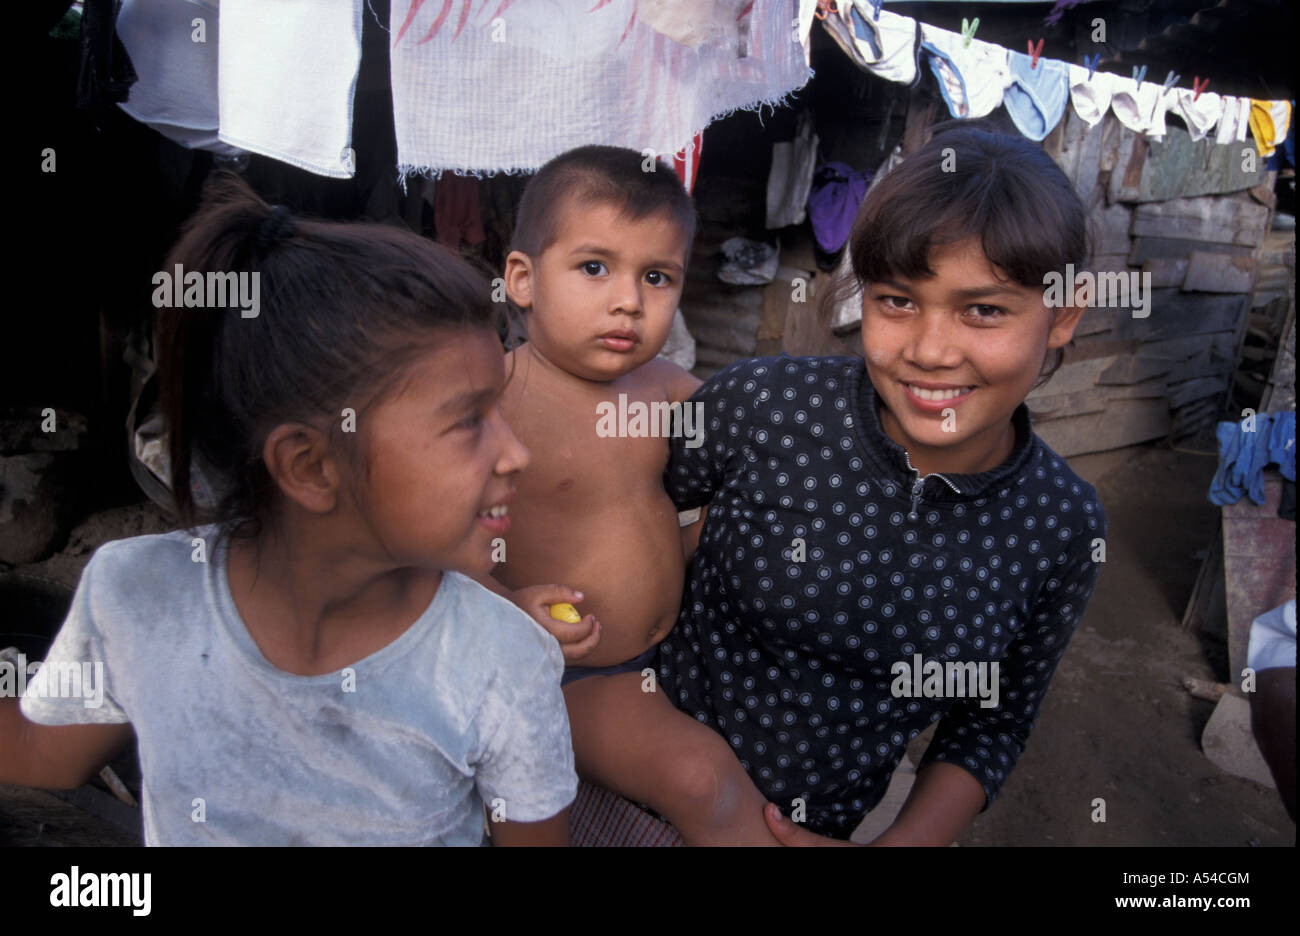 Painet hn1884 4348 honduras children living slum san pedro sula country developing nation less economically developed Stock Photo